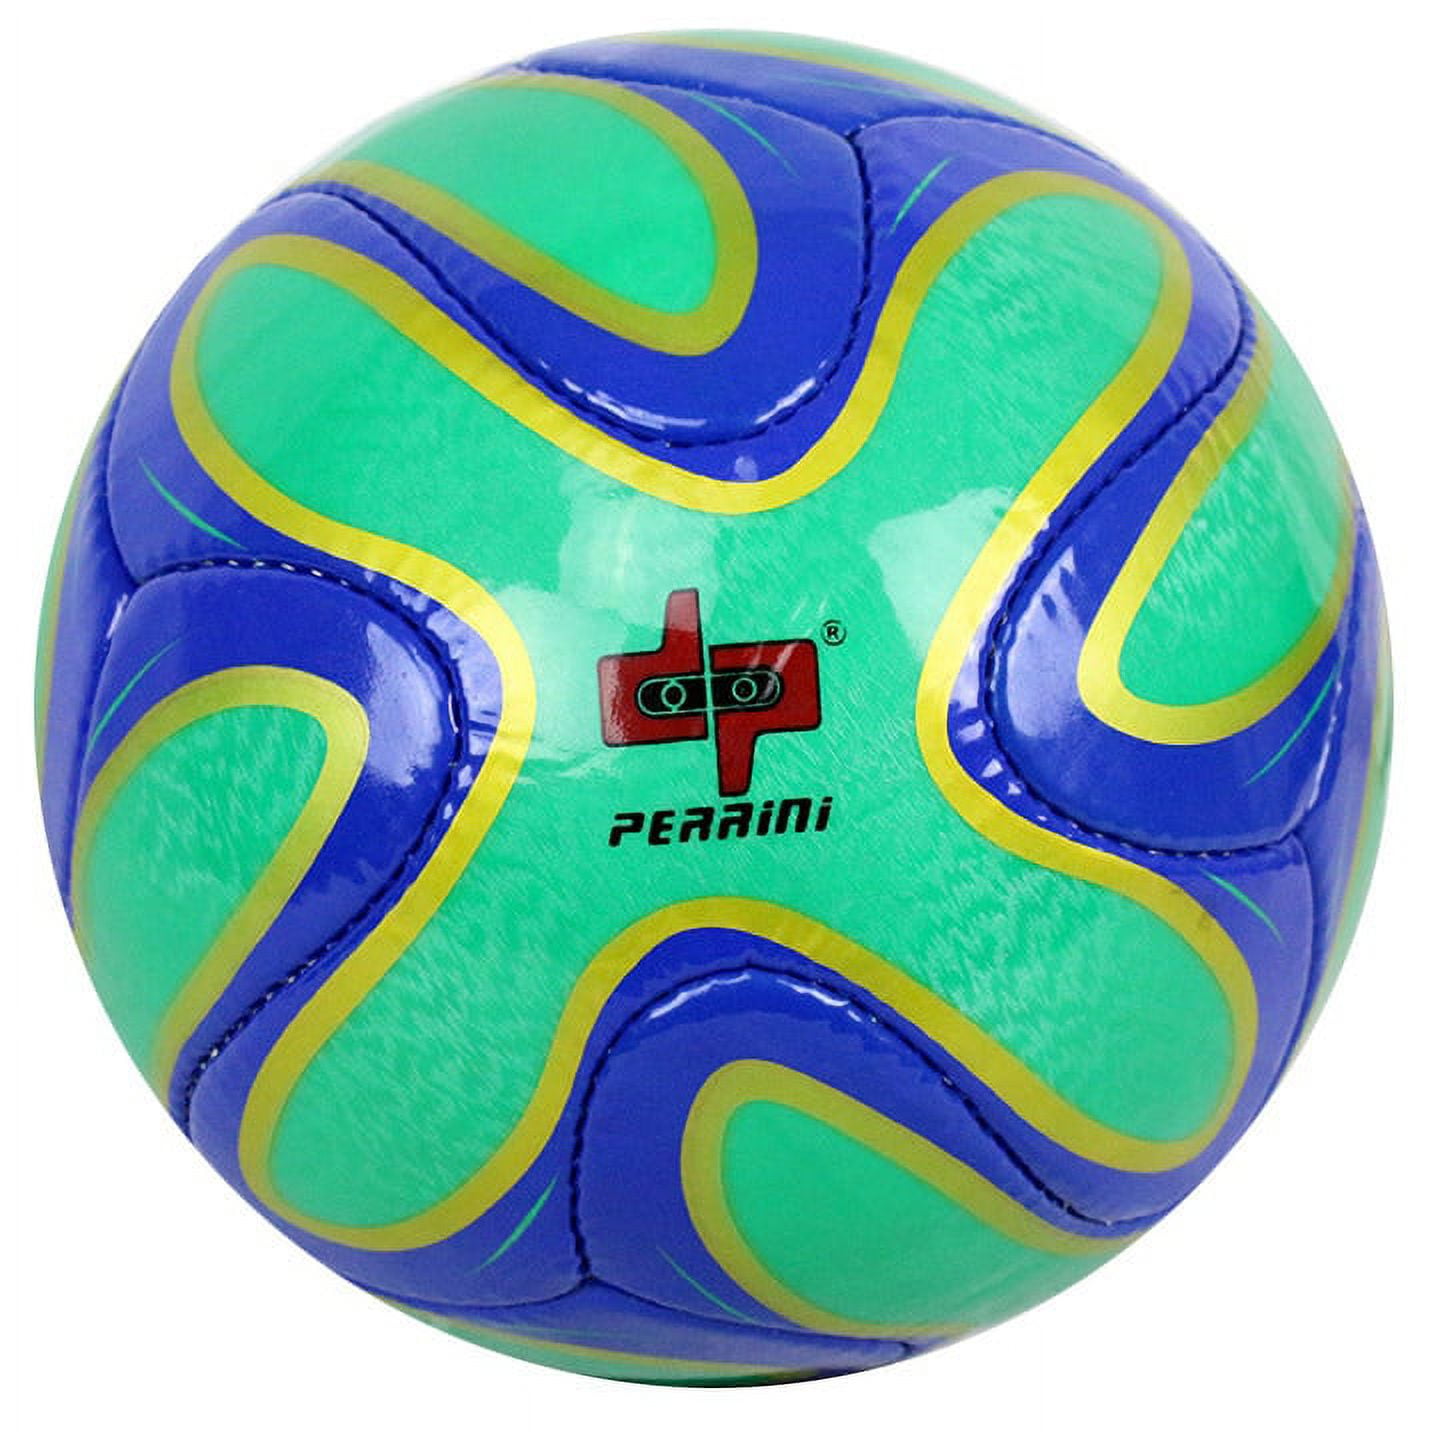 Defender Size 5 Official Soccer Ball Green/Blue/Gold Brazuca